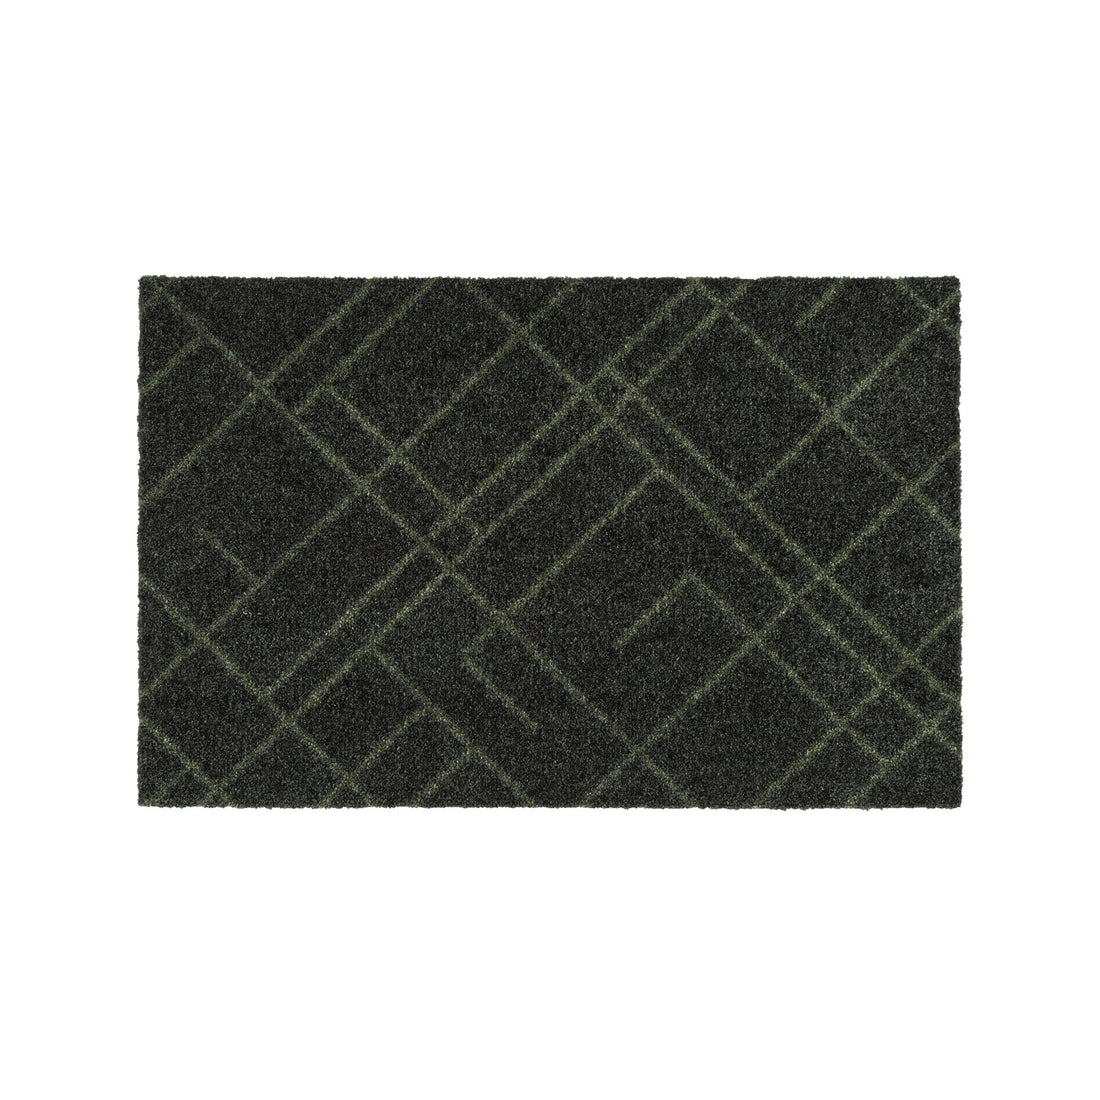 Bodenmatte 40 x 60 cm - Linien/dunkelgrün